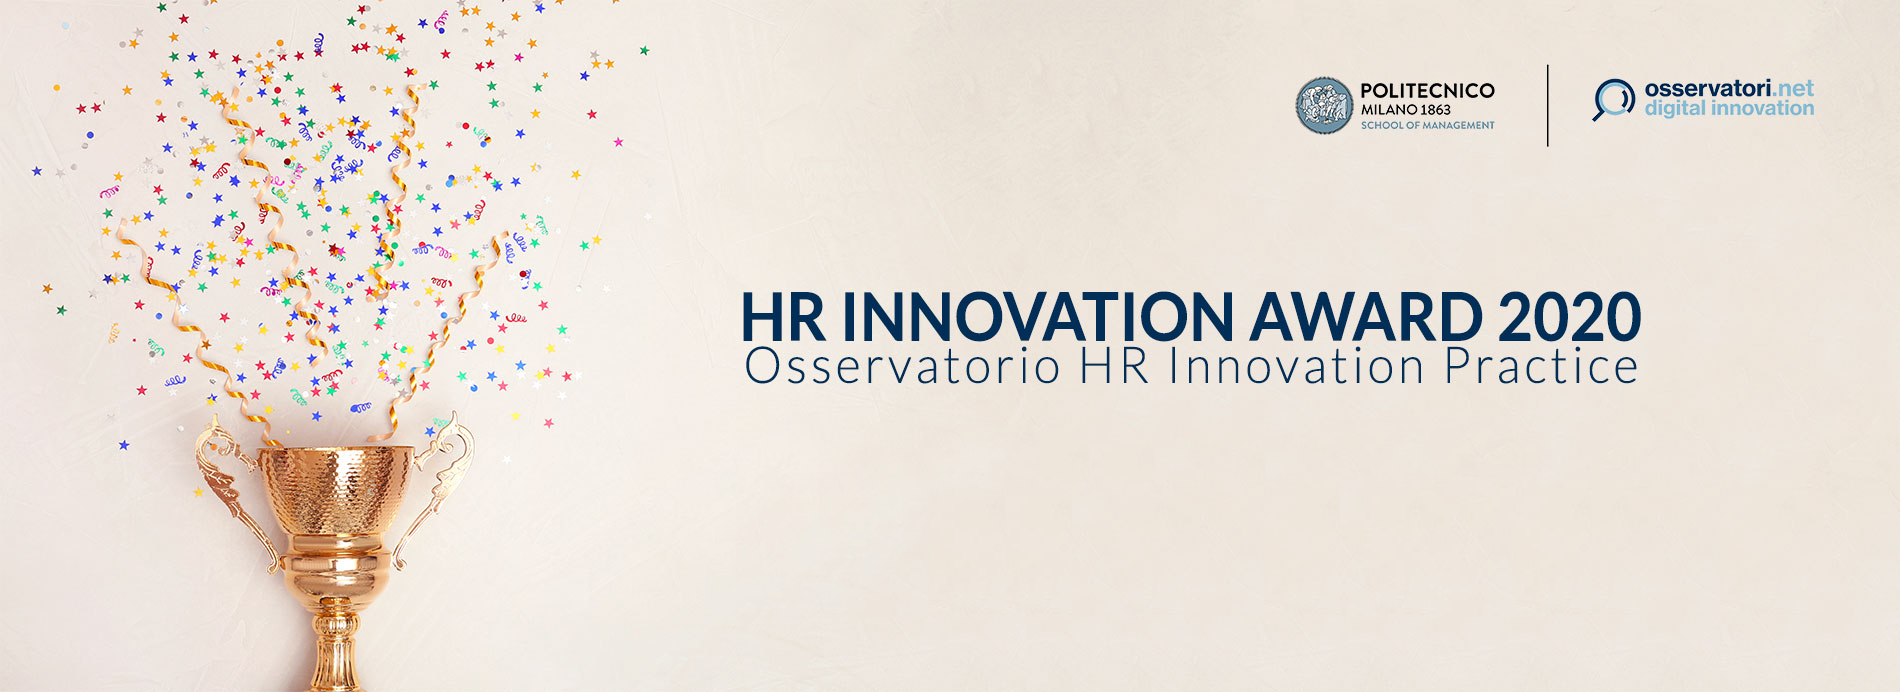 Il Gruppo Trevi vince il premio  “HR Innovation Award” Trevi spa